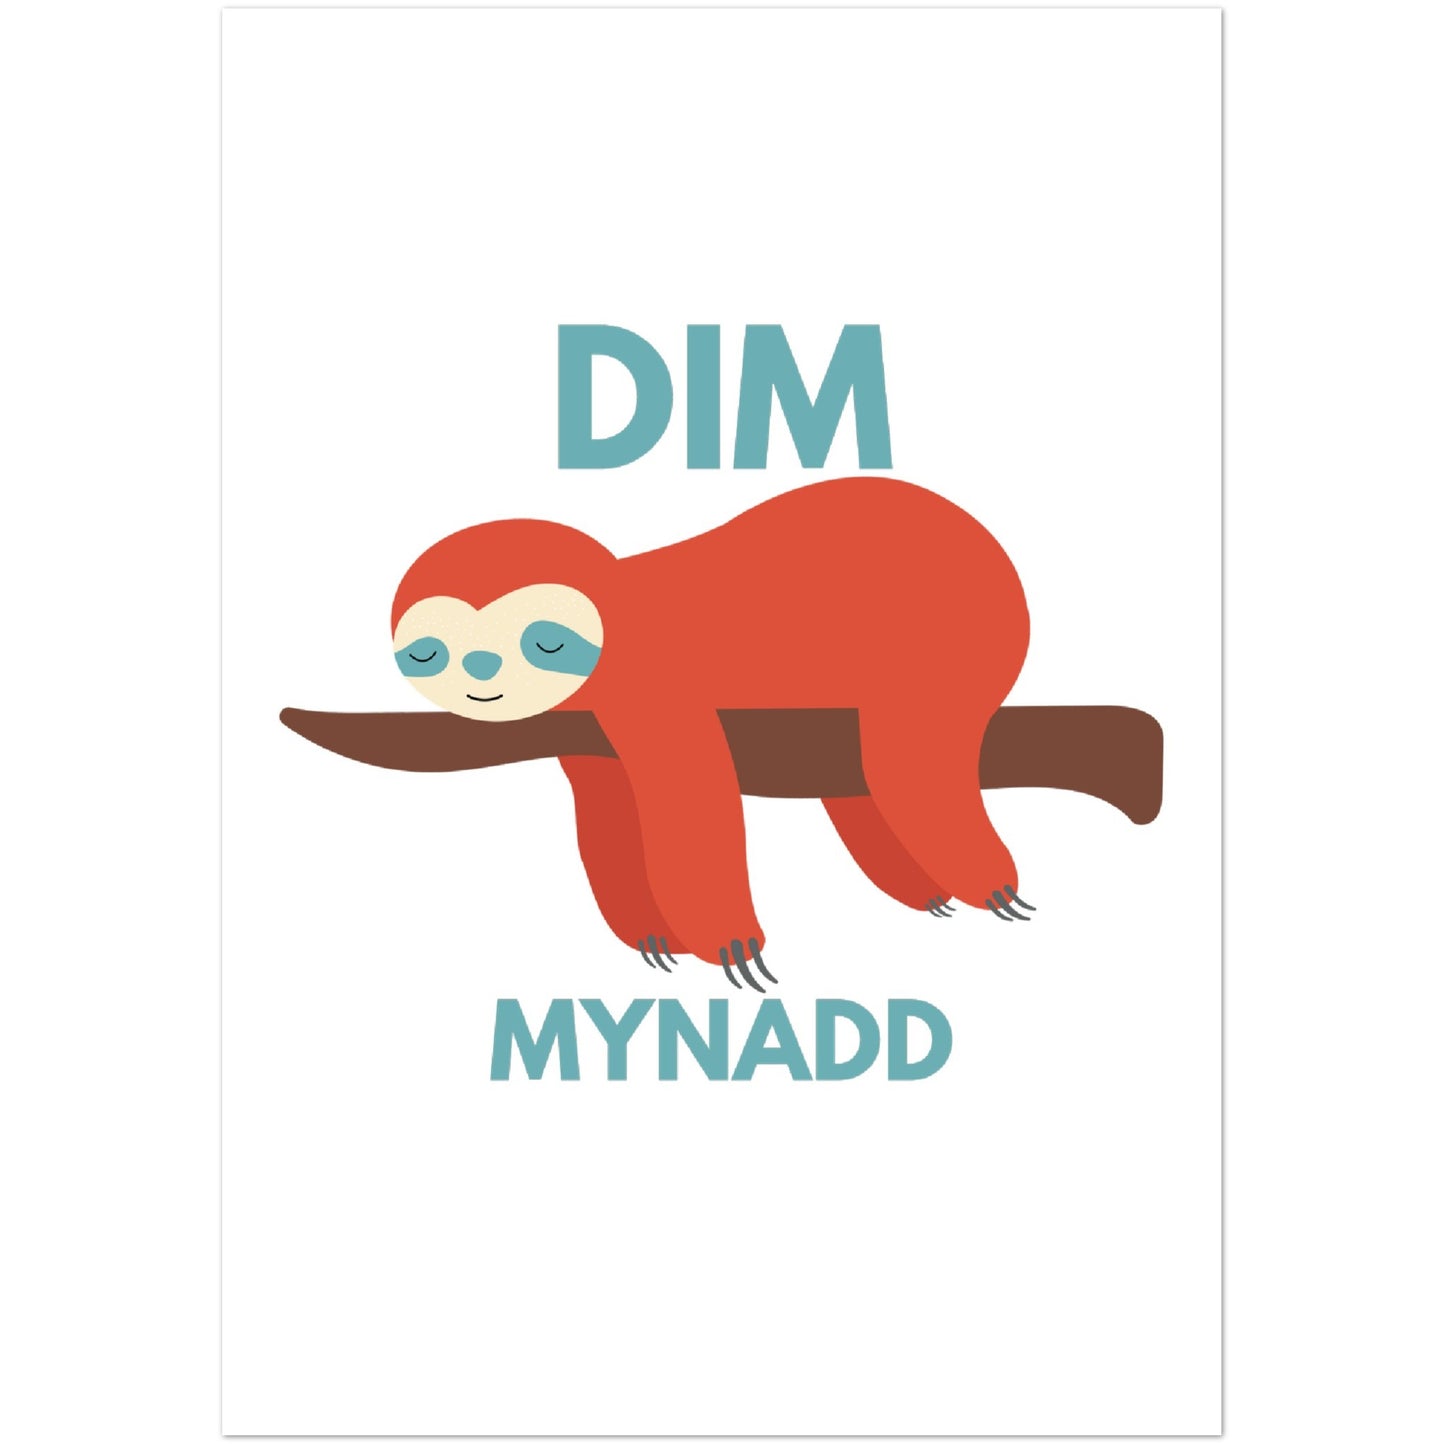 Dim Mynadd - Classic Semi-Glossy Paper Poster